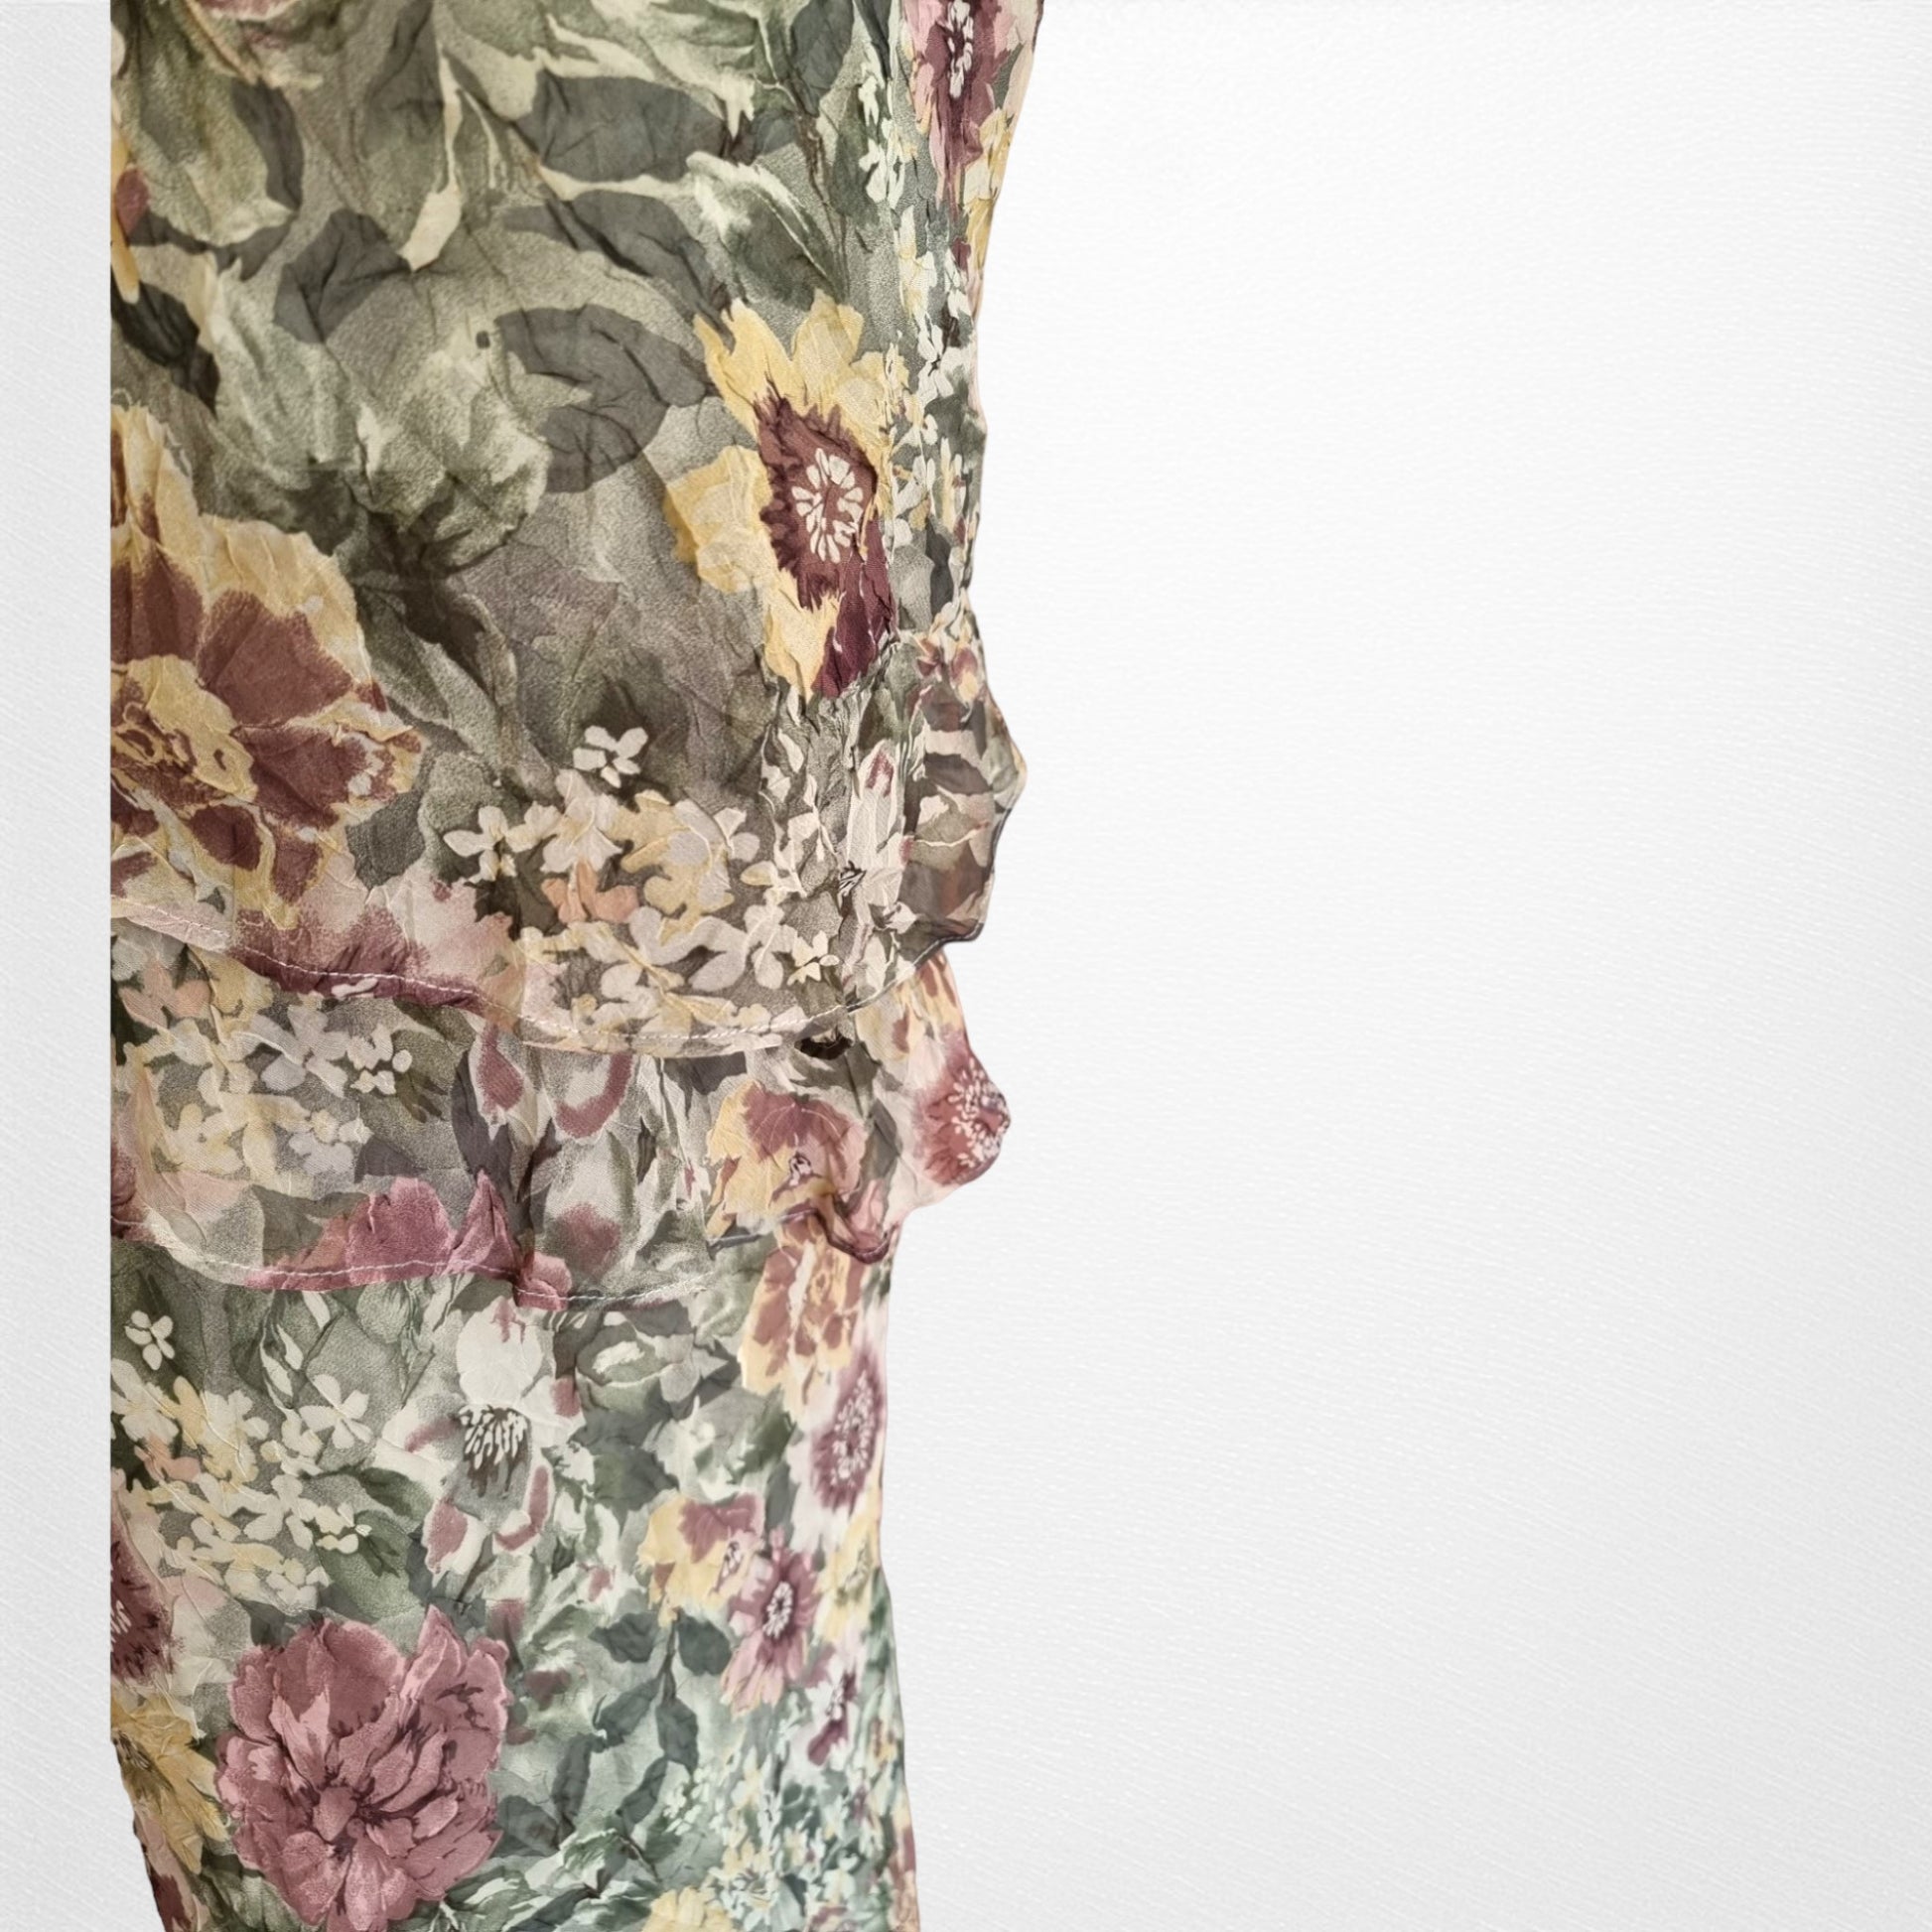 Allyson Whitmore Rare Vintage Boho Style Floral Tiered Maxi Dress UK 16 US 12 EU44 Timeless Fashions